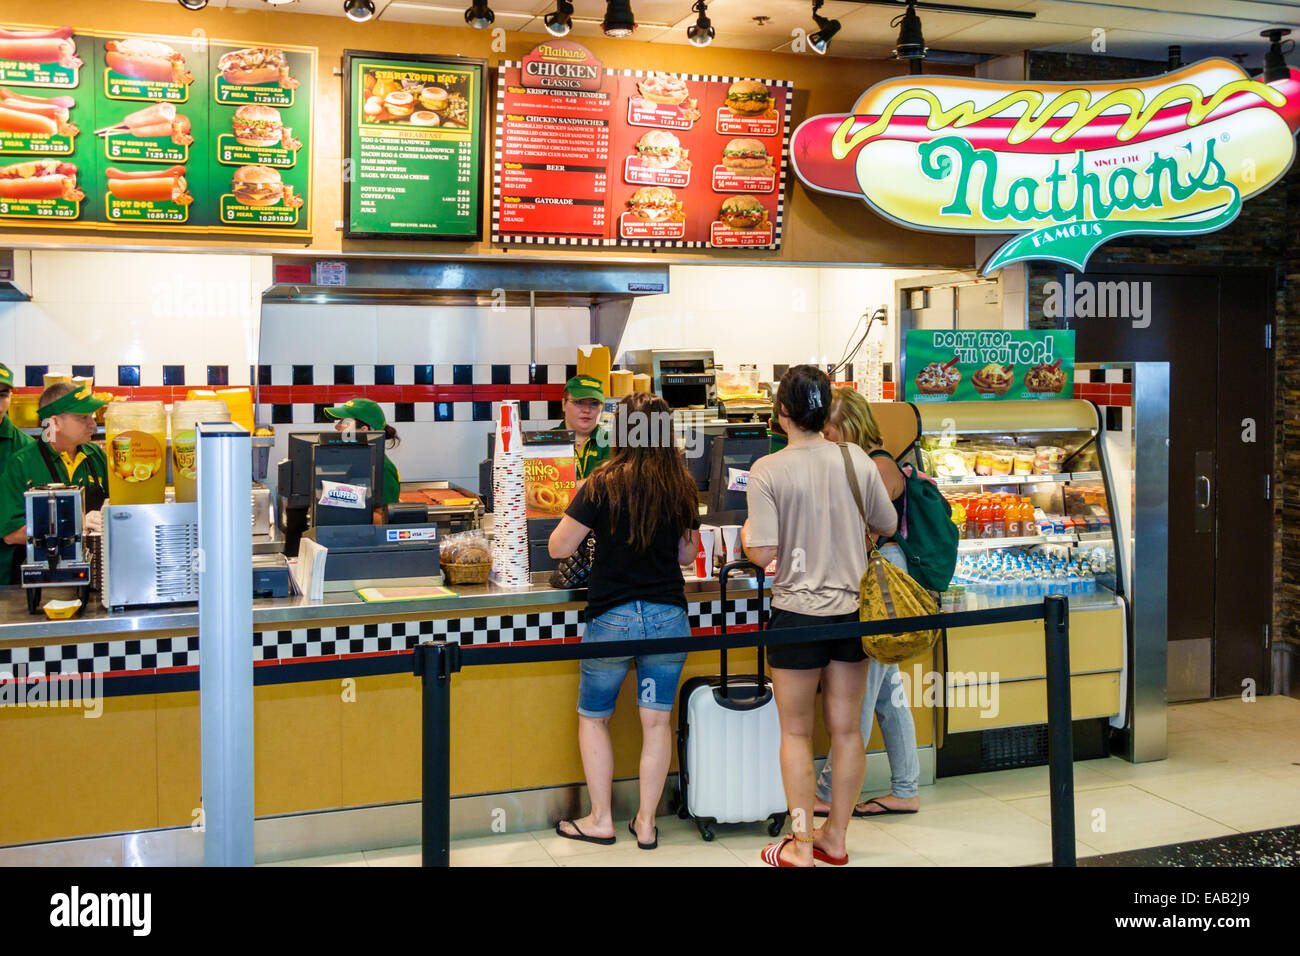 Miami Florida International Airport MIA, Terminal, Gate, Nathan's Famous, Fast Food, Hot Dogs, Schalter, Kunden, Bestellung, FL140830014 Stockfoto